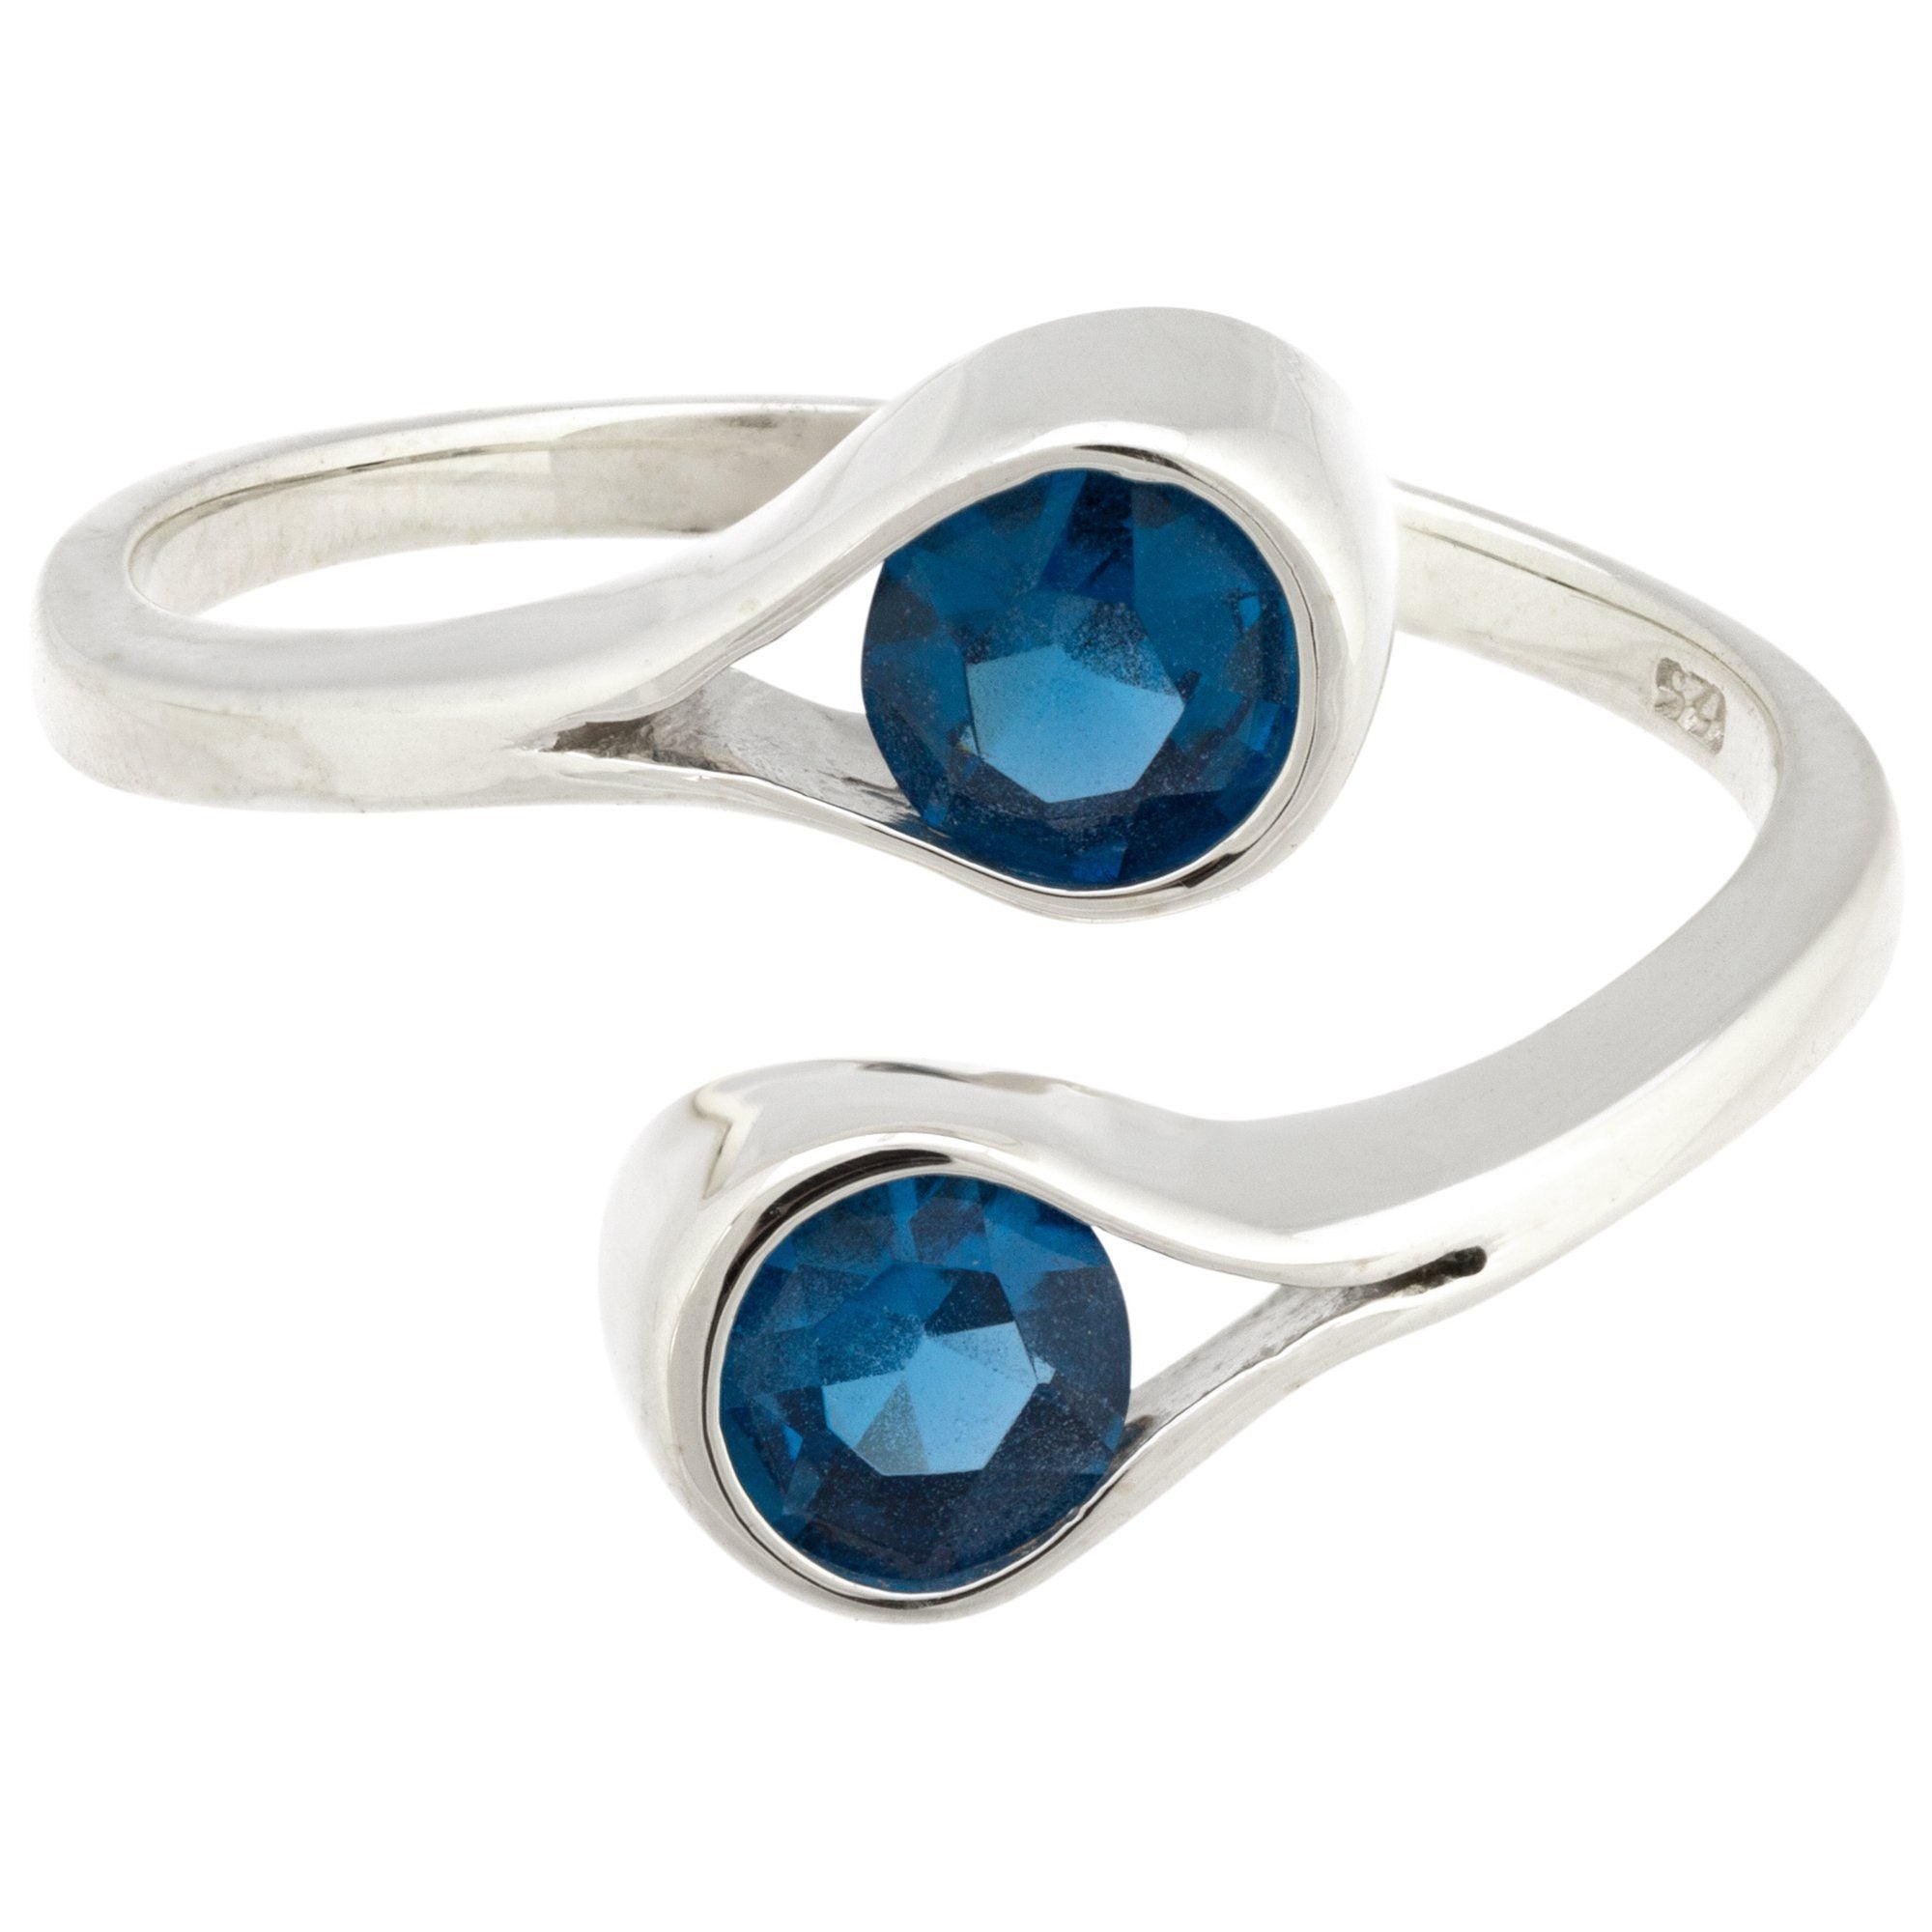 Double Drop Sterling & Gemstone Wrap Ring - Blue Topaz - 6